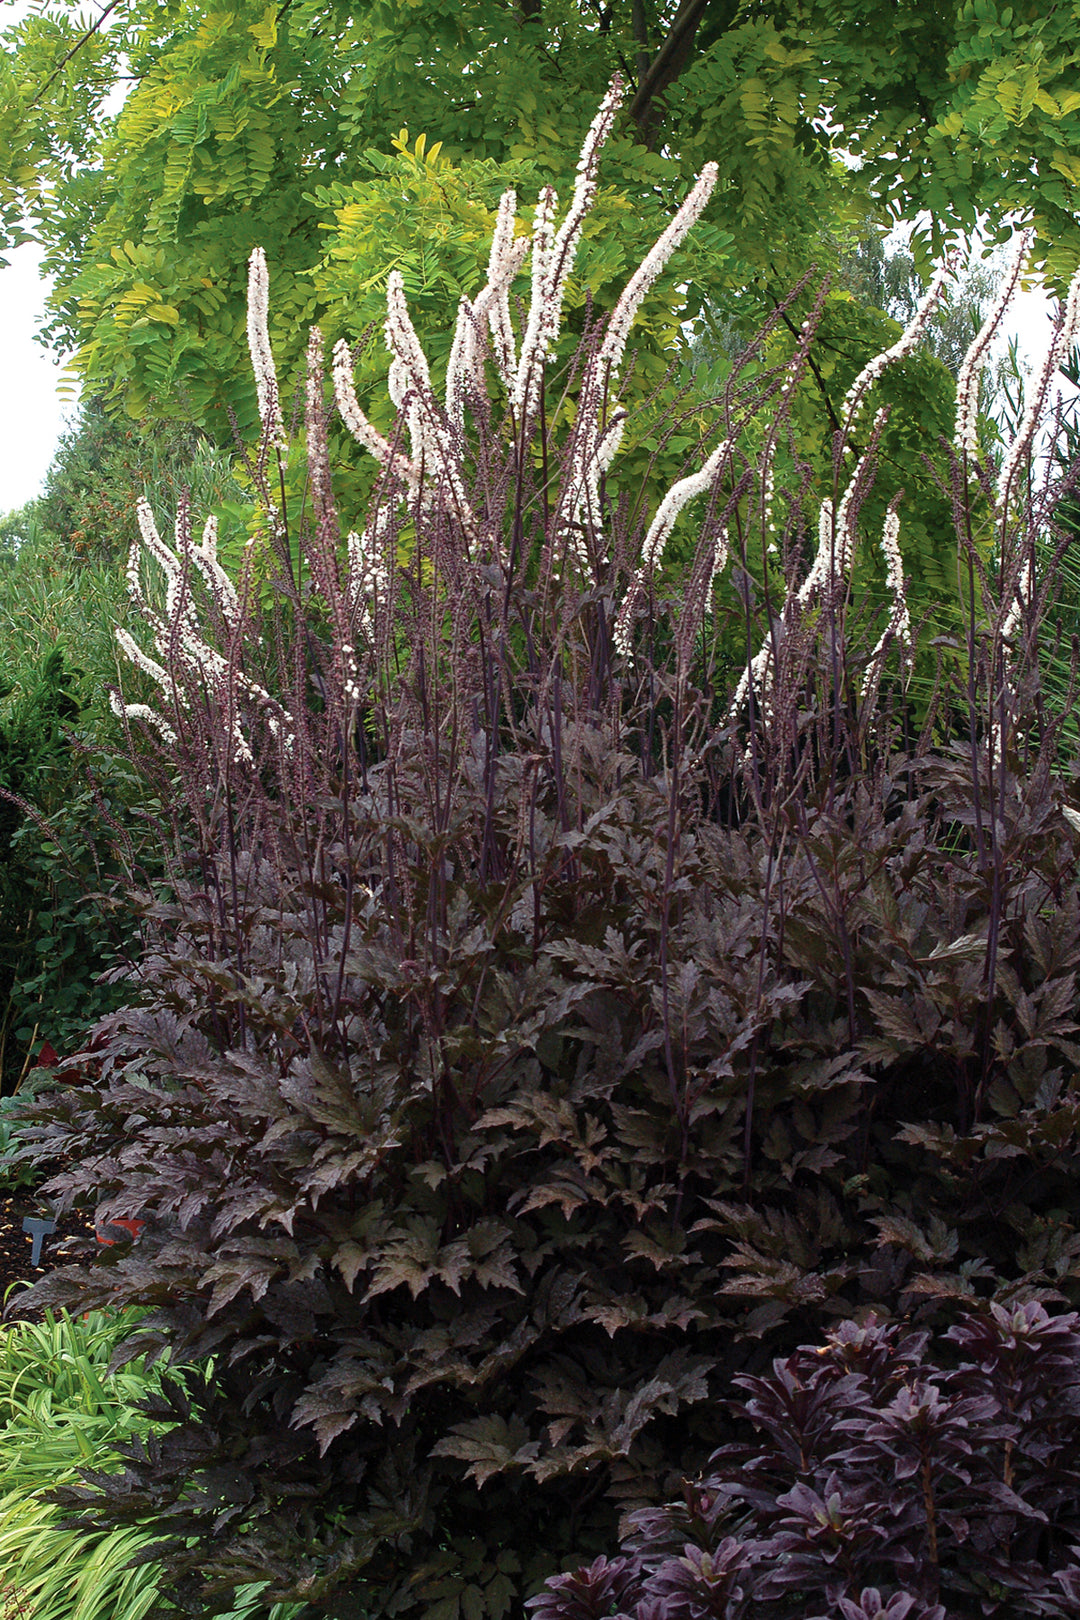 Actaea simplex 'Black Negligee' (bugbane), entire plant in bloom.